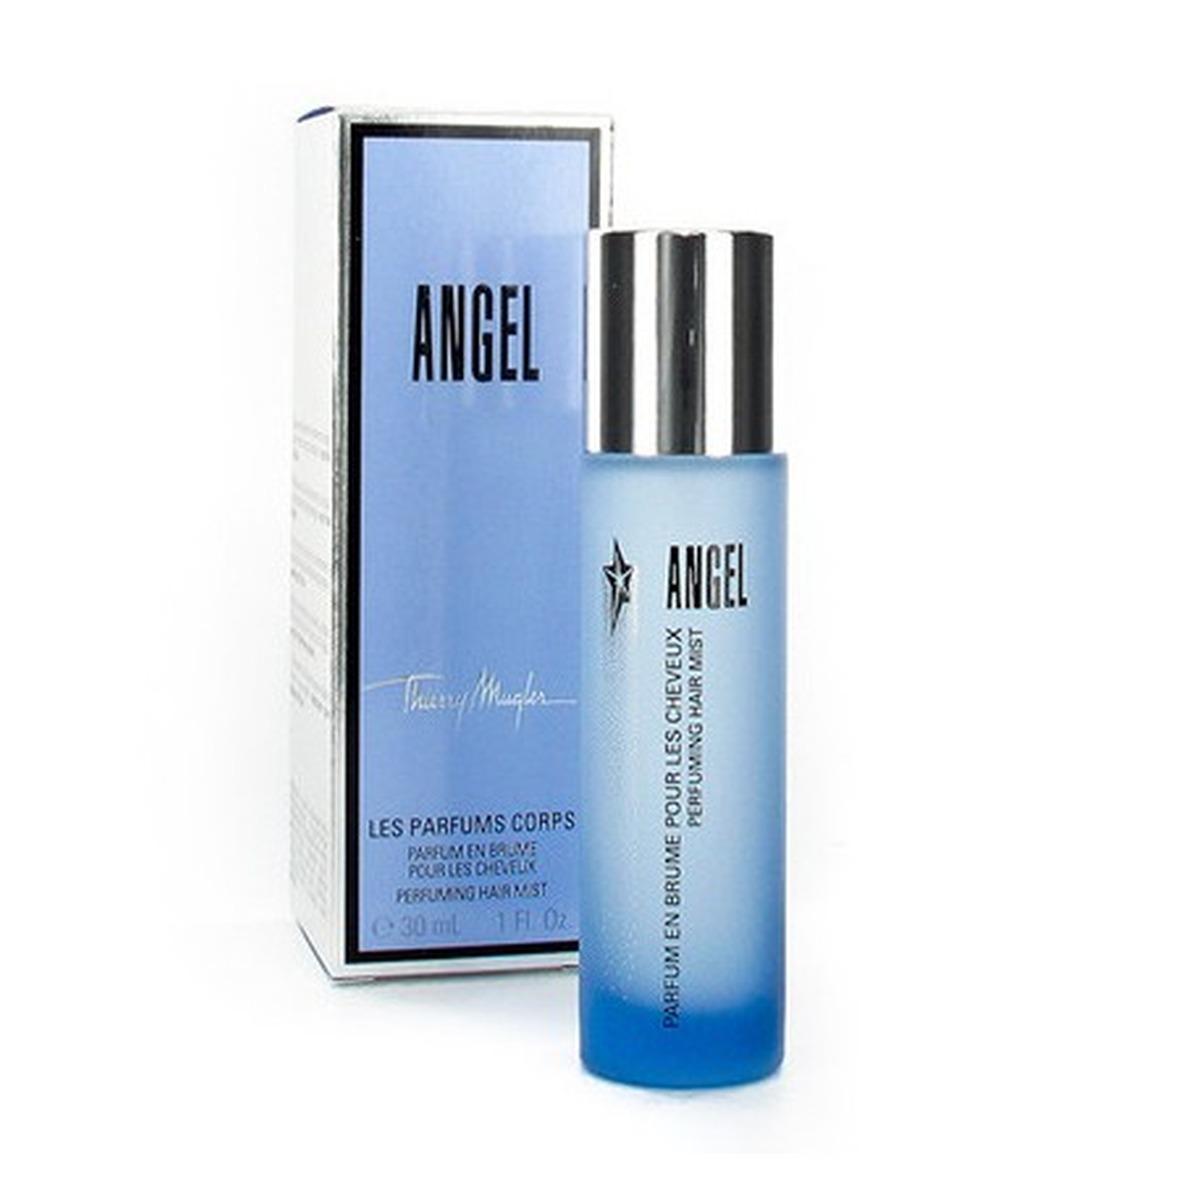 Angel 30 ml